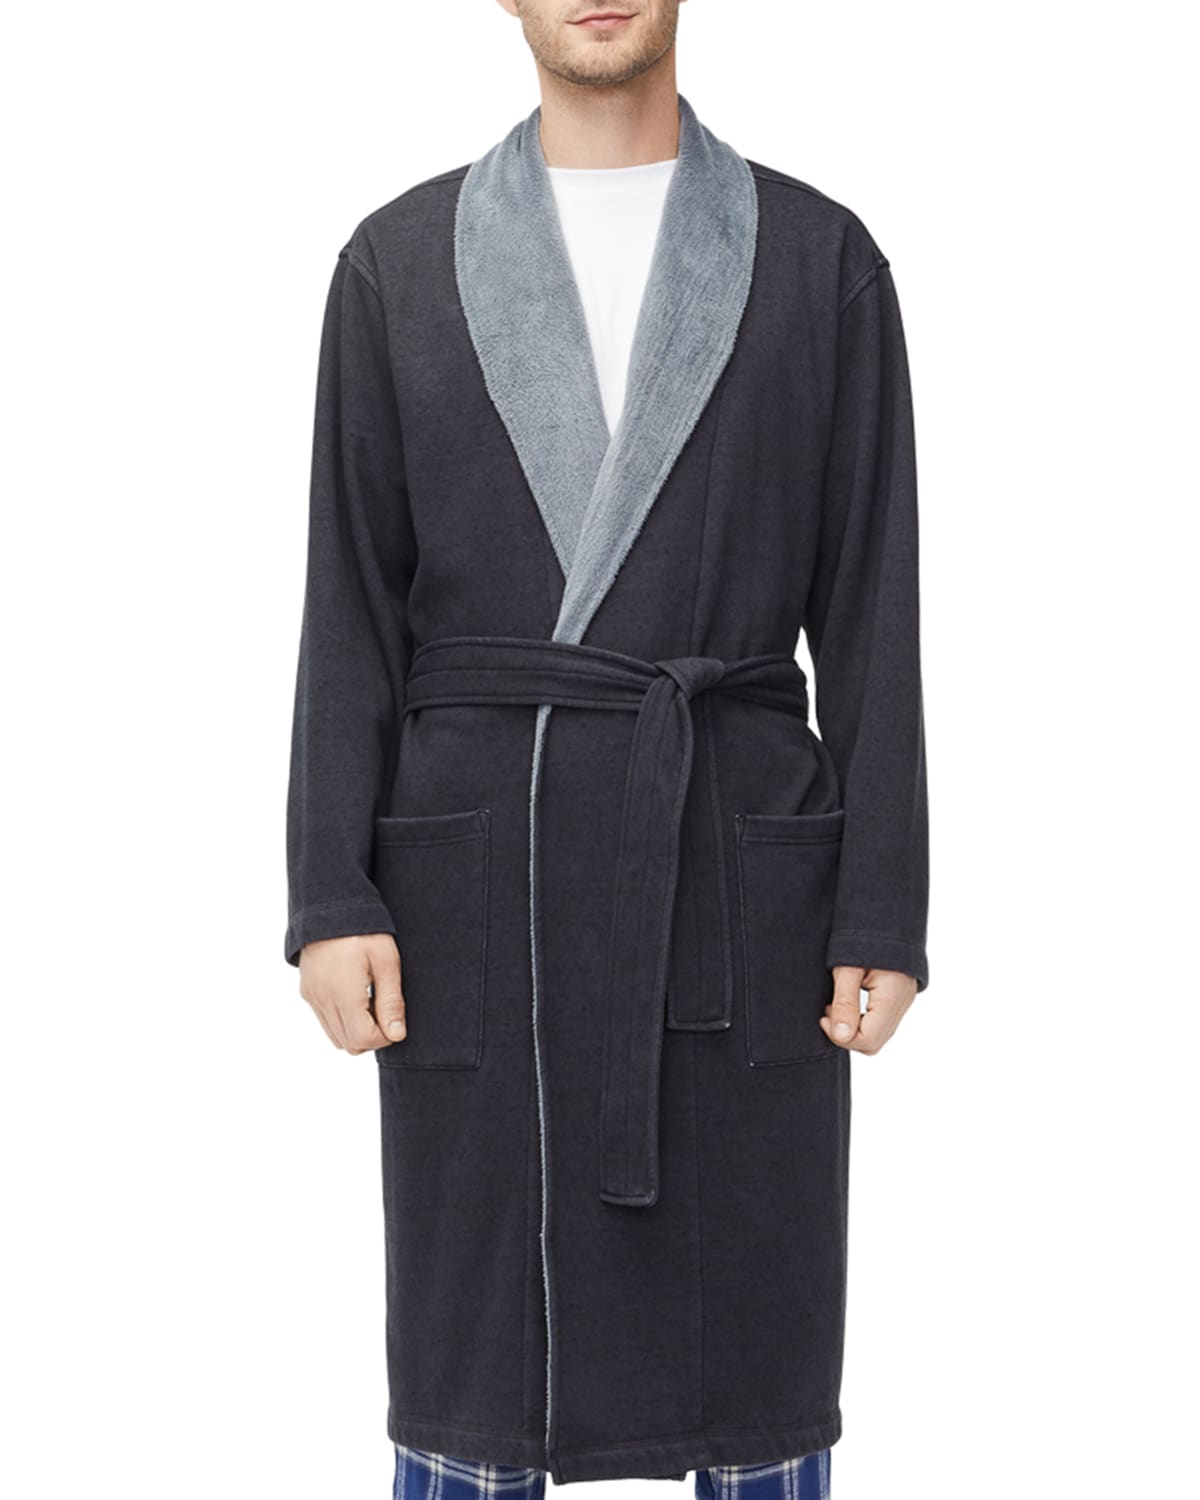 Pivaconis Mens Bathrobe Belted Cotton Kimono Loose Fit Color Block Shawl-Collar Robe 